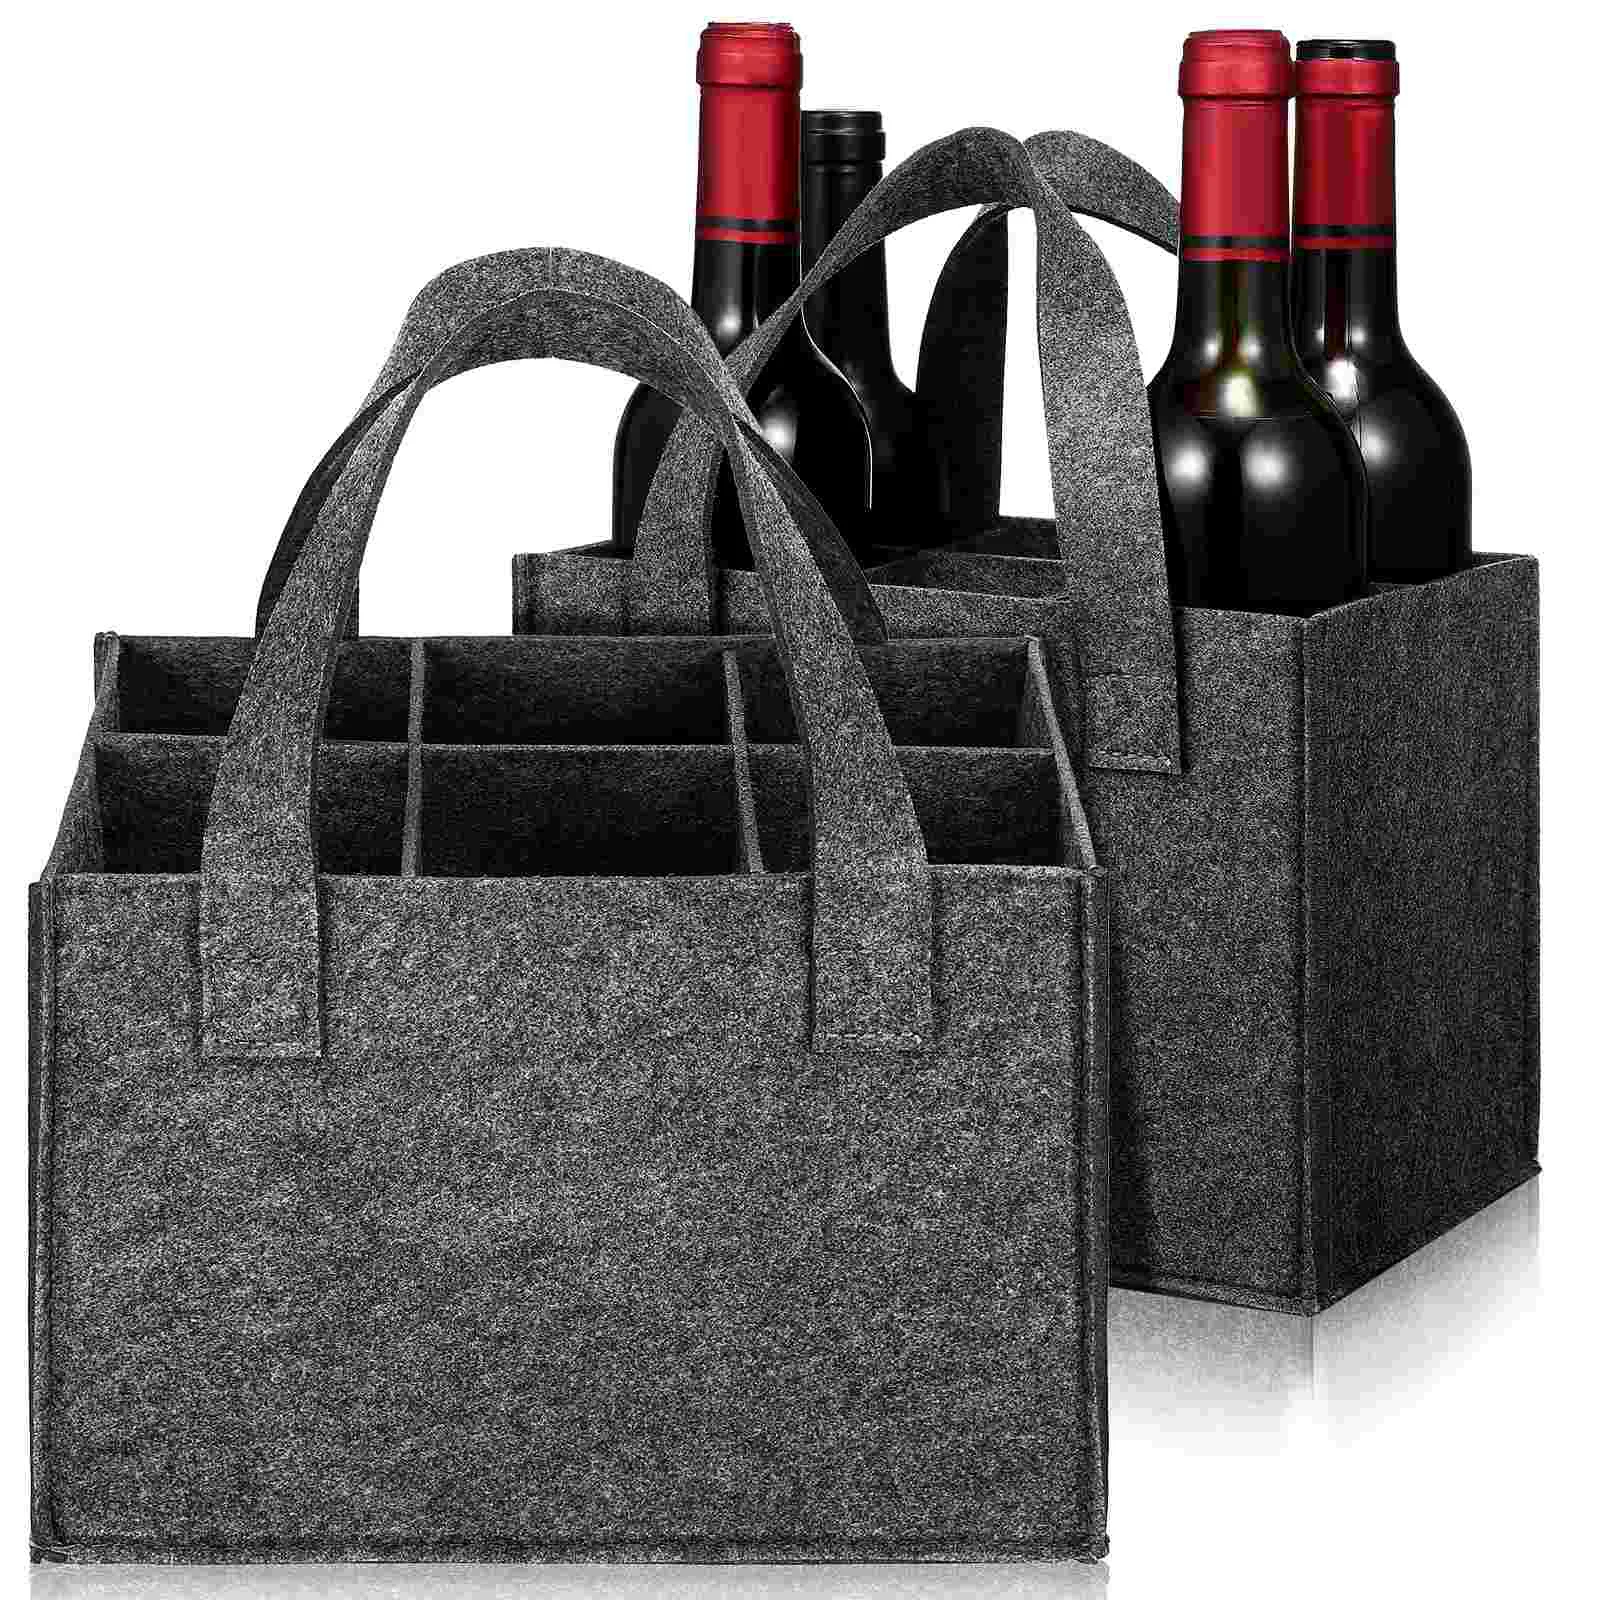 

Wine Bottle Carriers Felt Wine Bottle Bags Portable Red Wine Bottle Holder Bags Red Wine Carrier Tote for Dinner Party